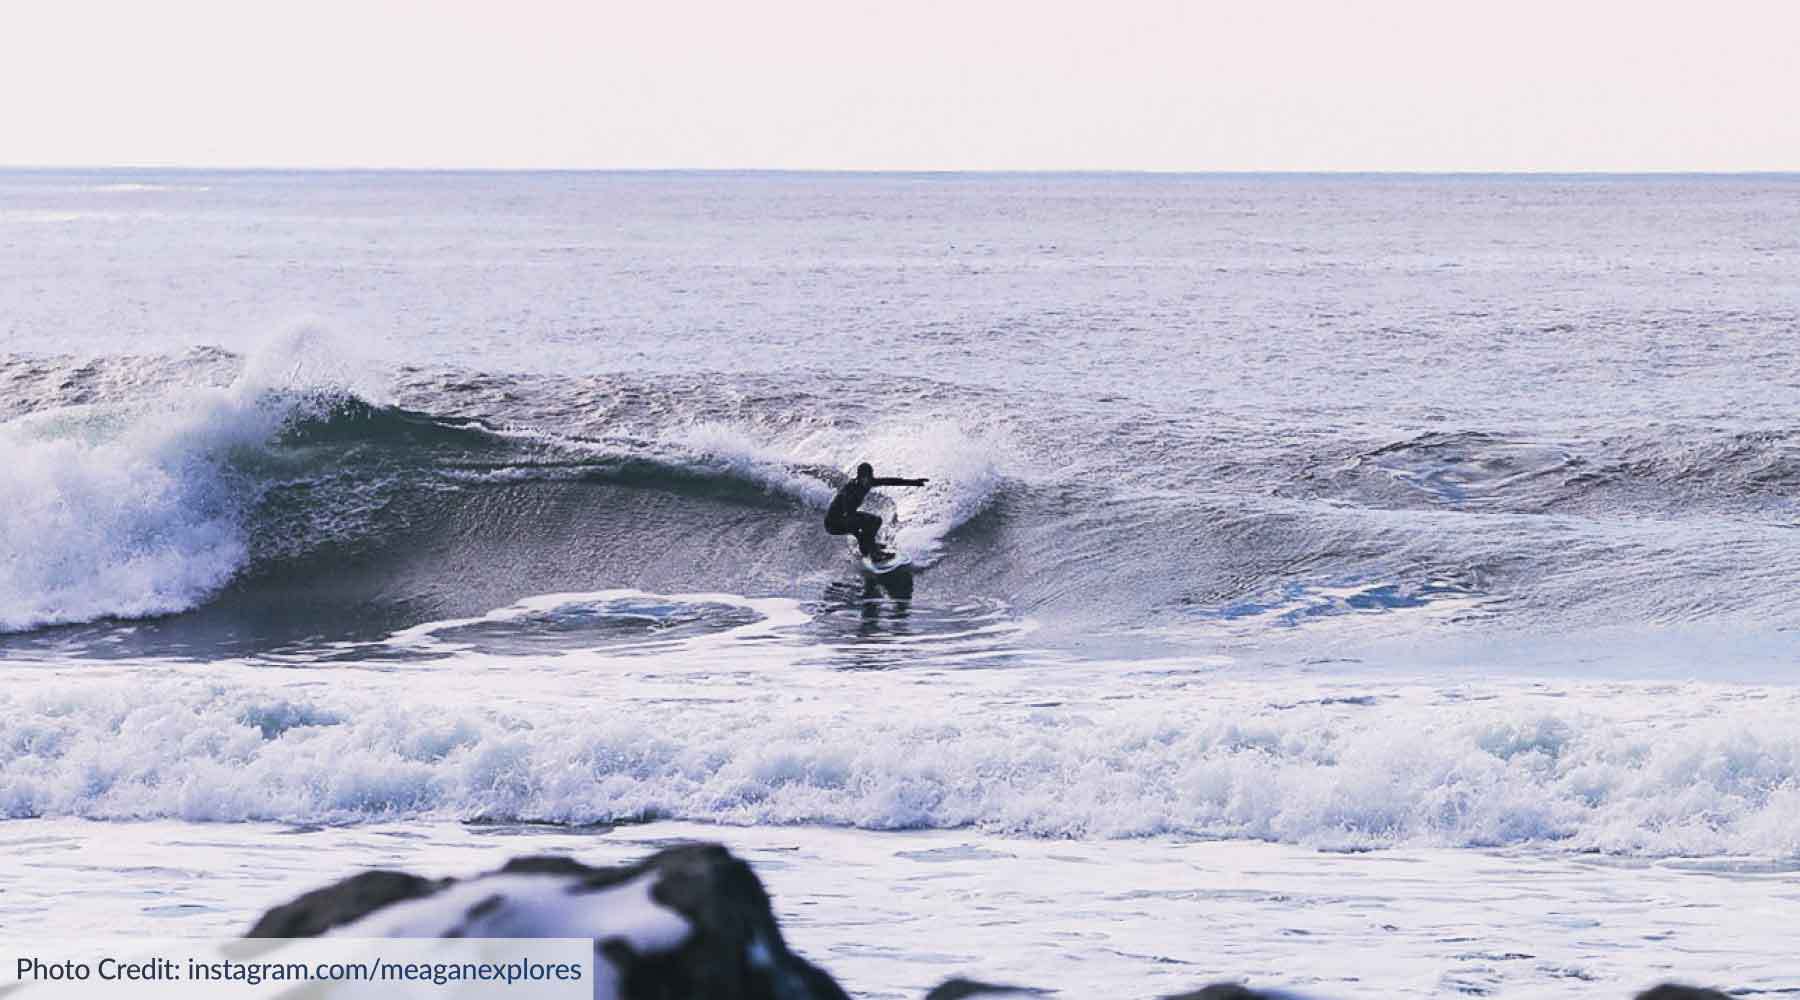 Dr. Davis caught surfing the east coast